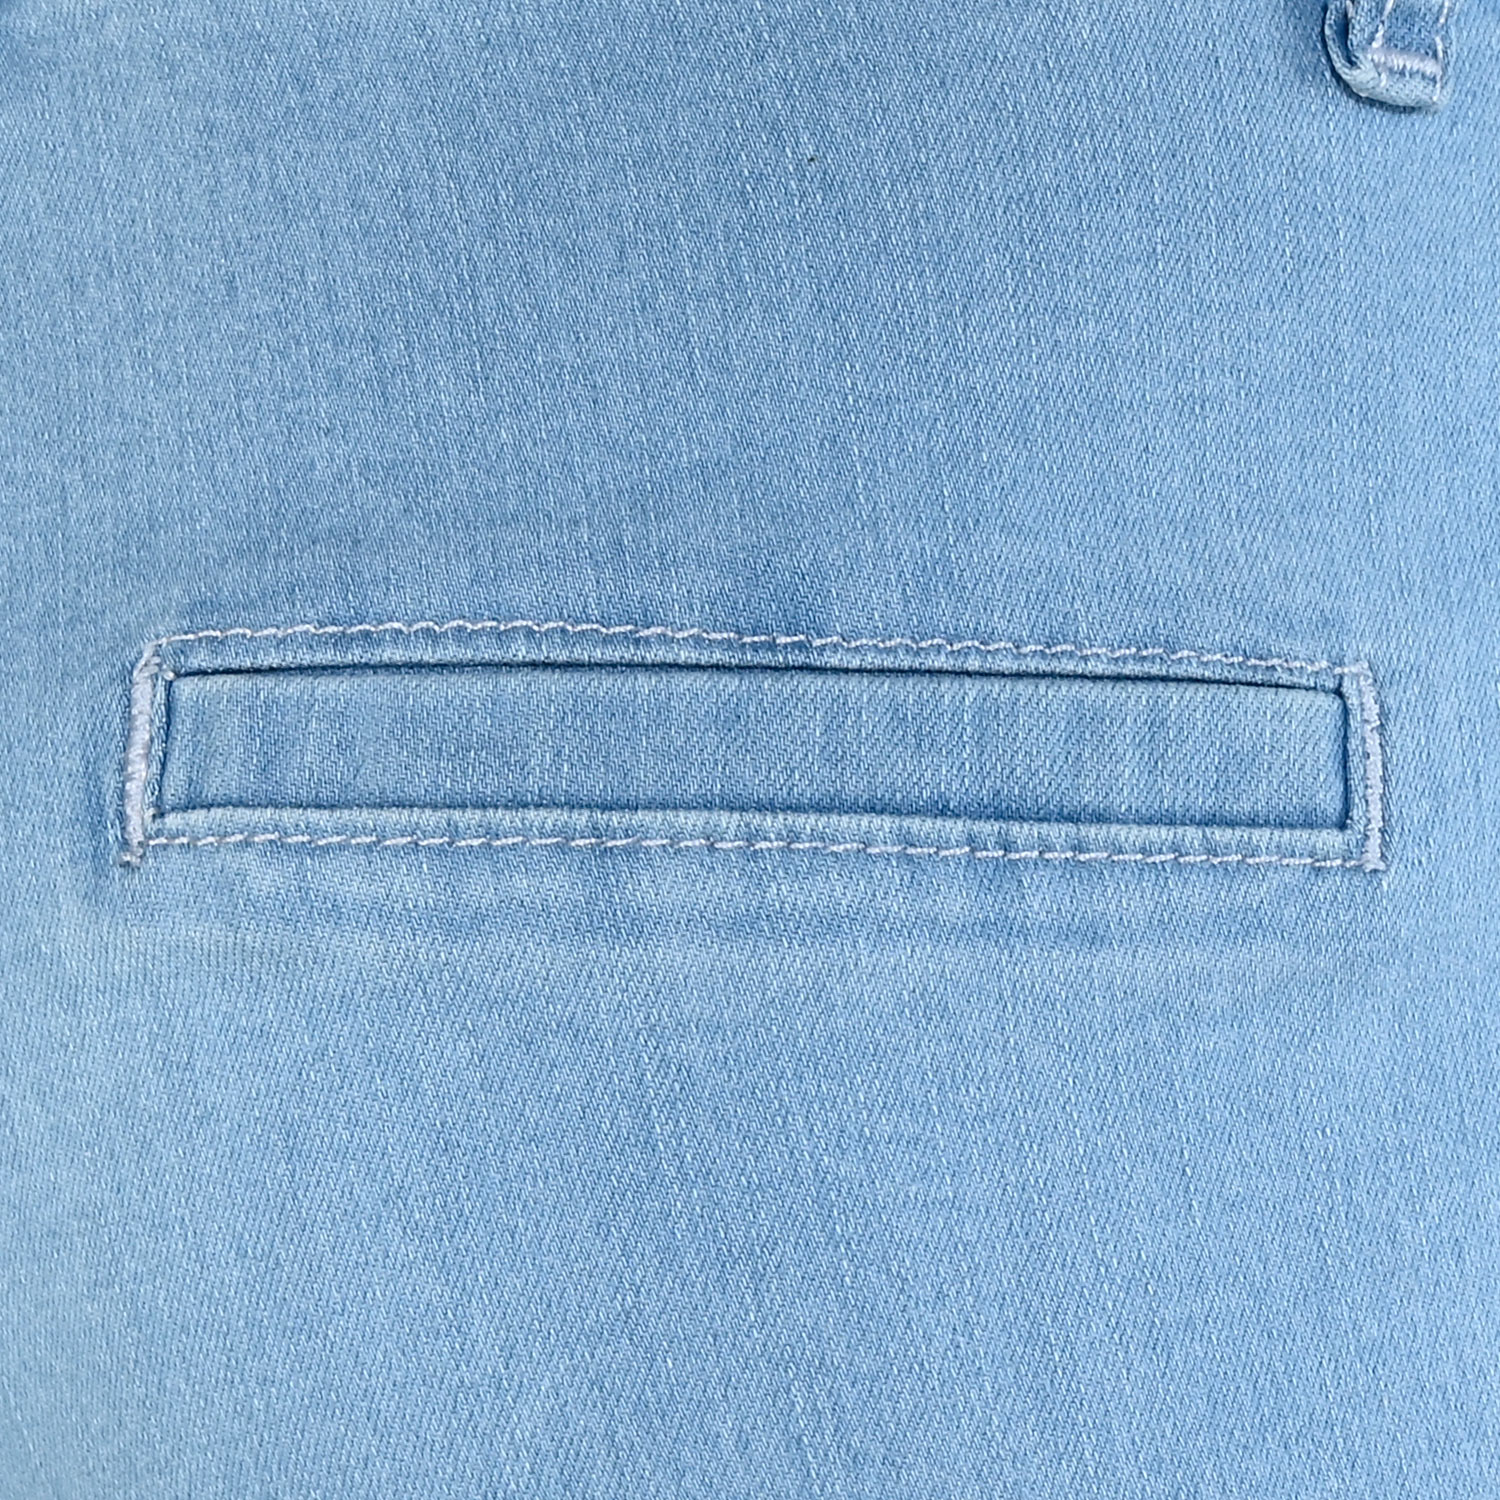 1376-Girls Wide Leg Jeans verfügbar in Slim,Normal